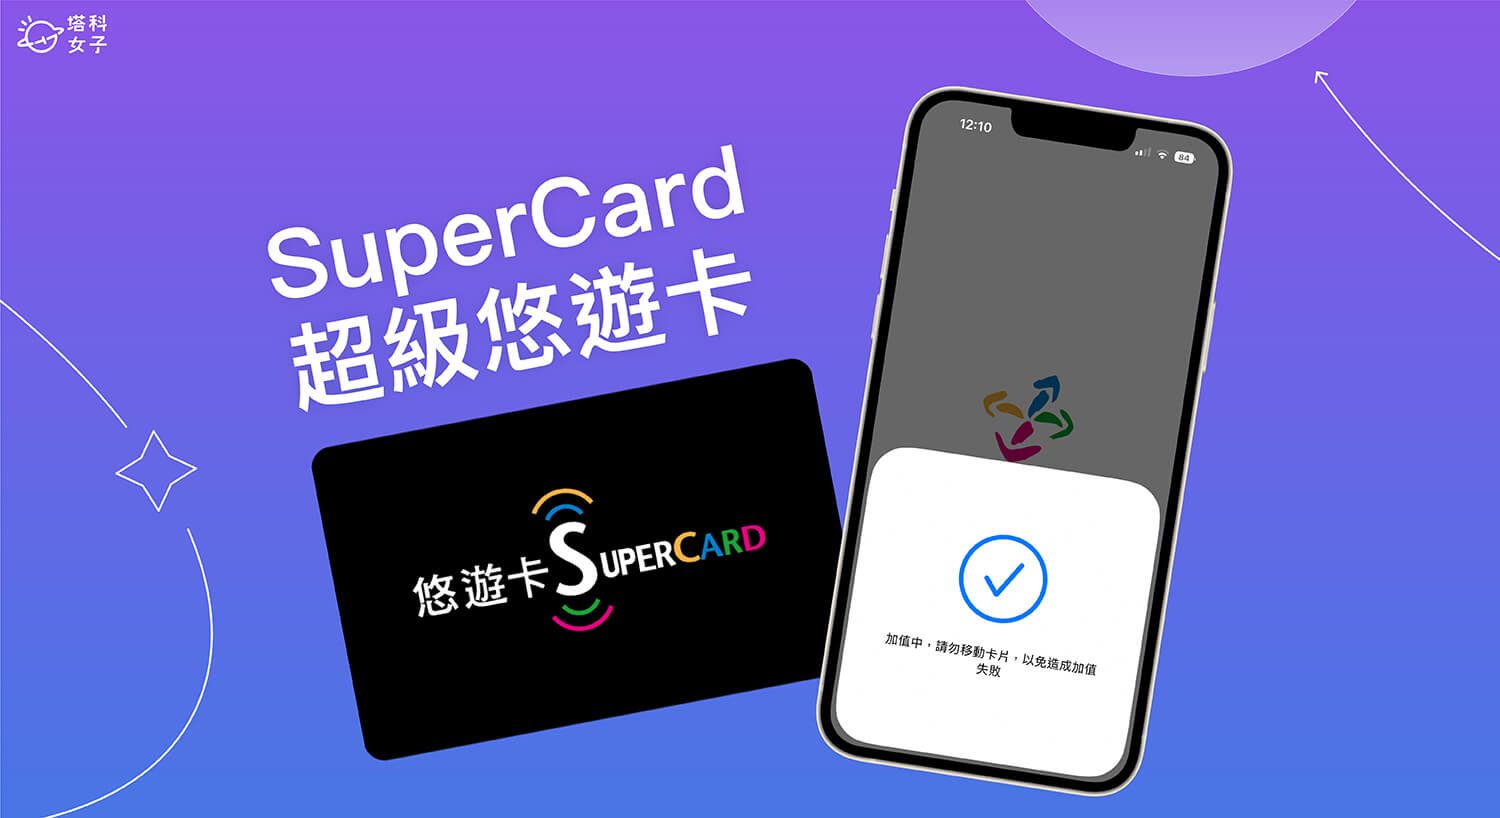 SuperCARD 超級悠遊卡使用教學，直接透過 iPhone 感應加值